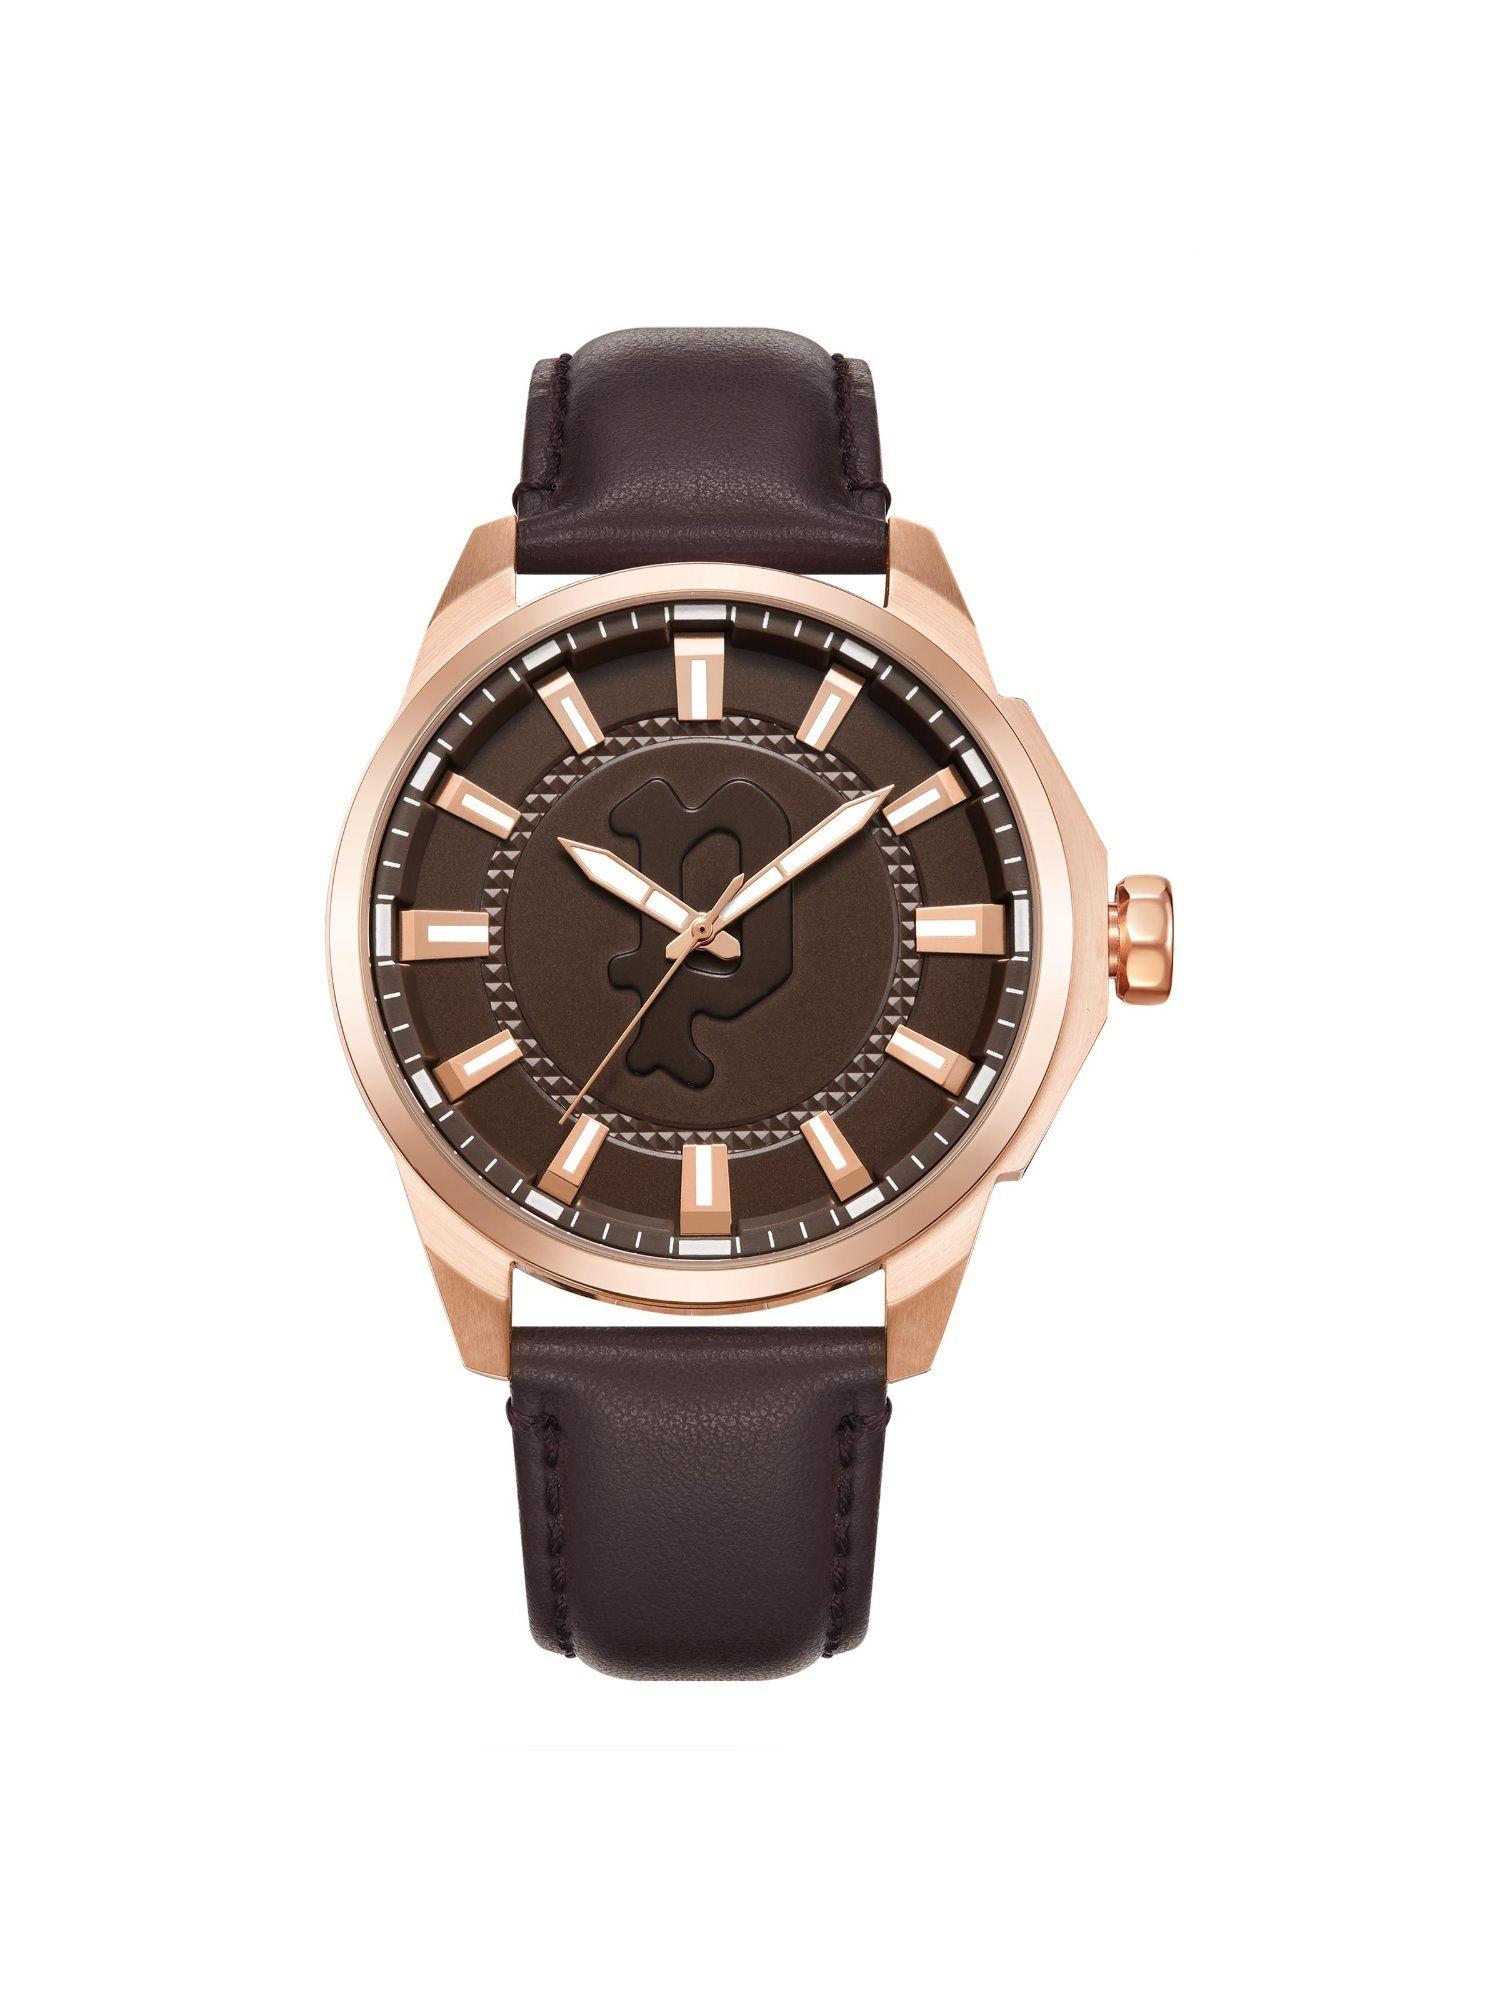 plpewja2204307 brown dial analog watch for men